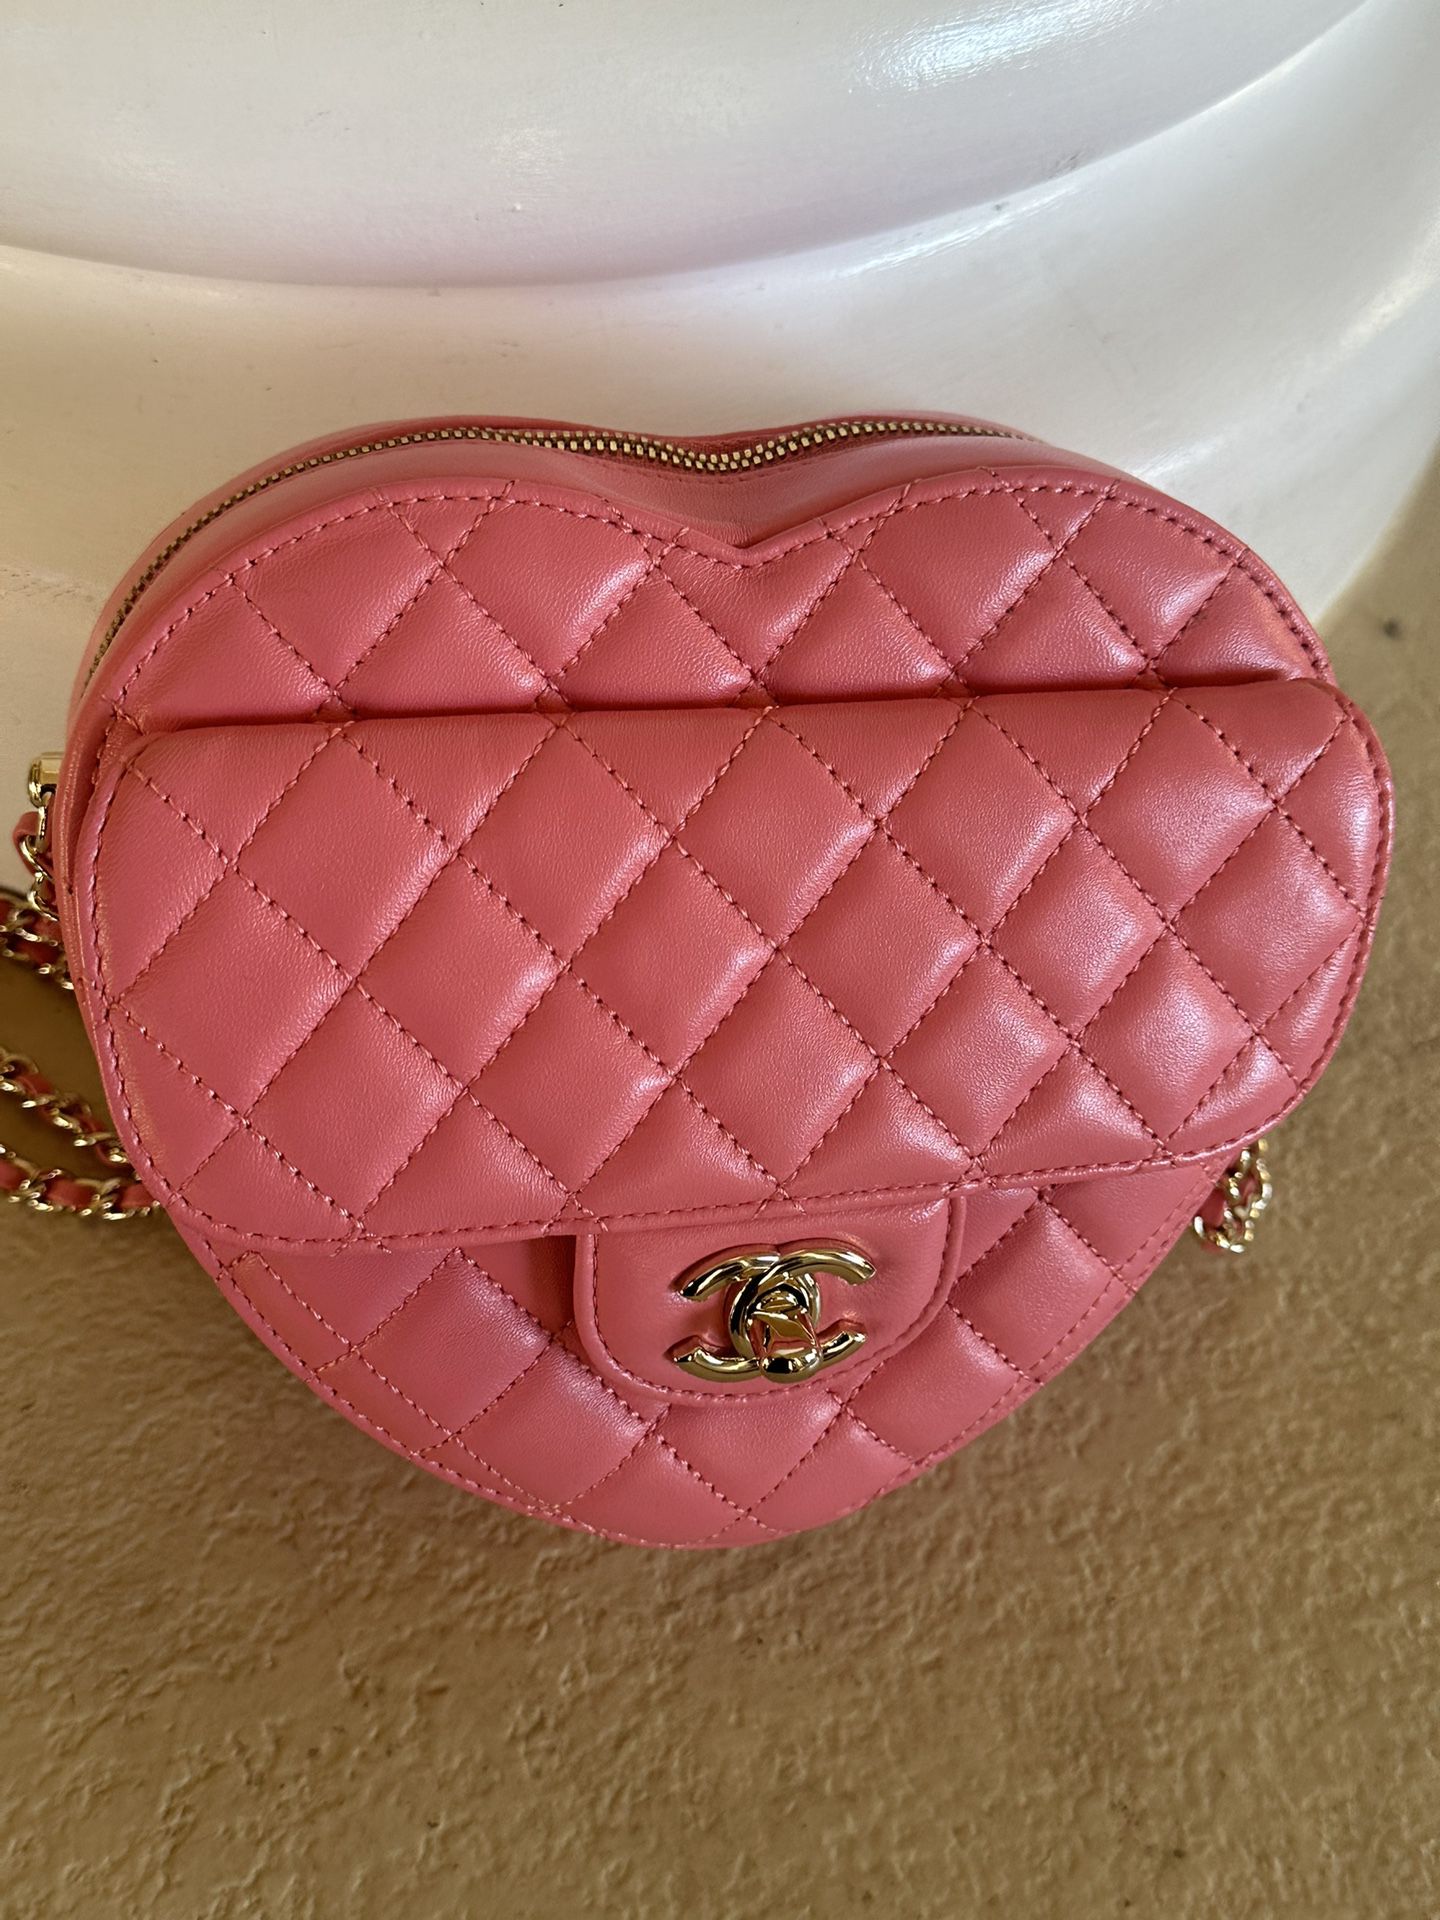 Heart Pink Chanel Bag